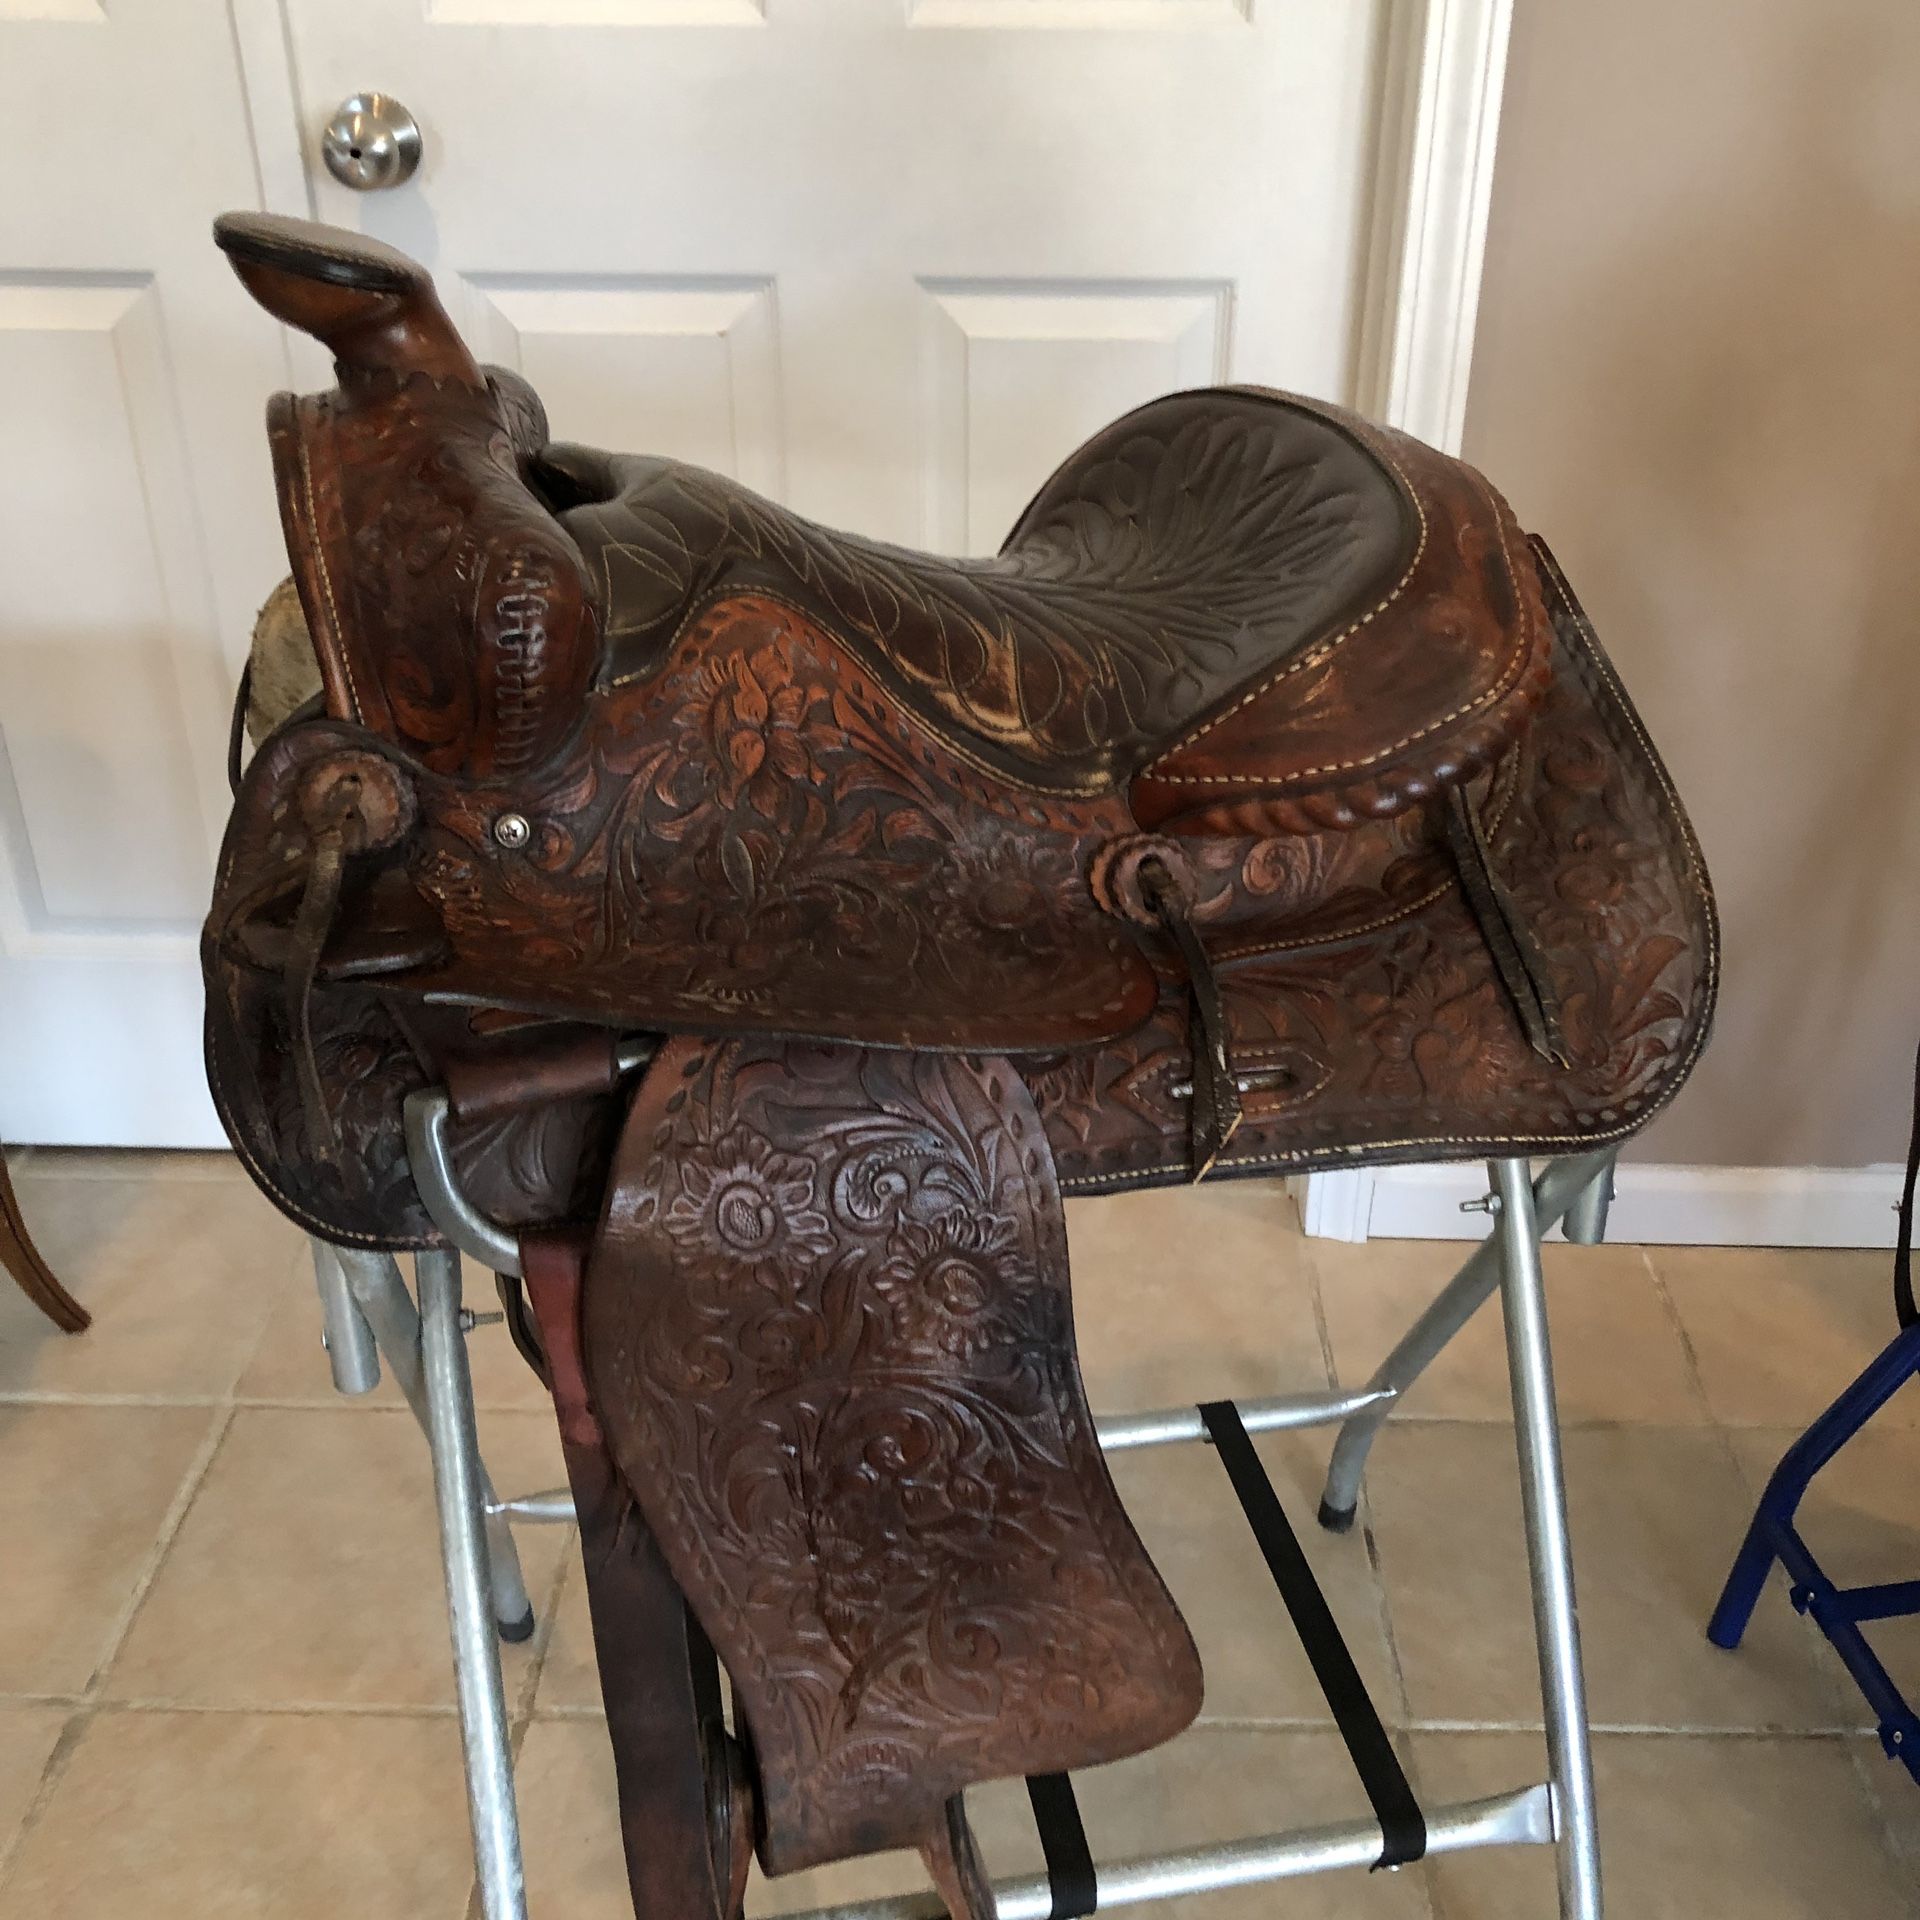 Big Horn 15” saddle, bridle, breast collar, snaffle bit, curb chain, split reigns